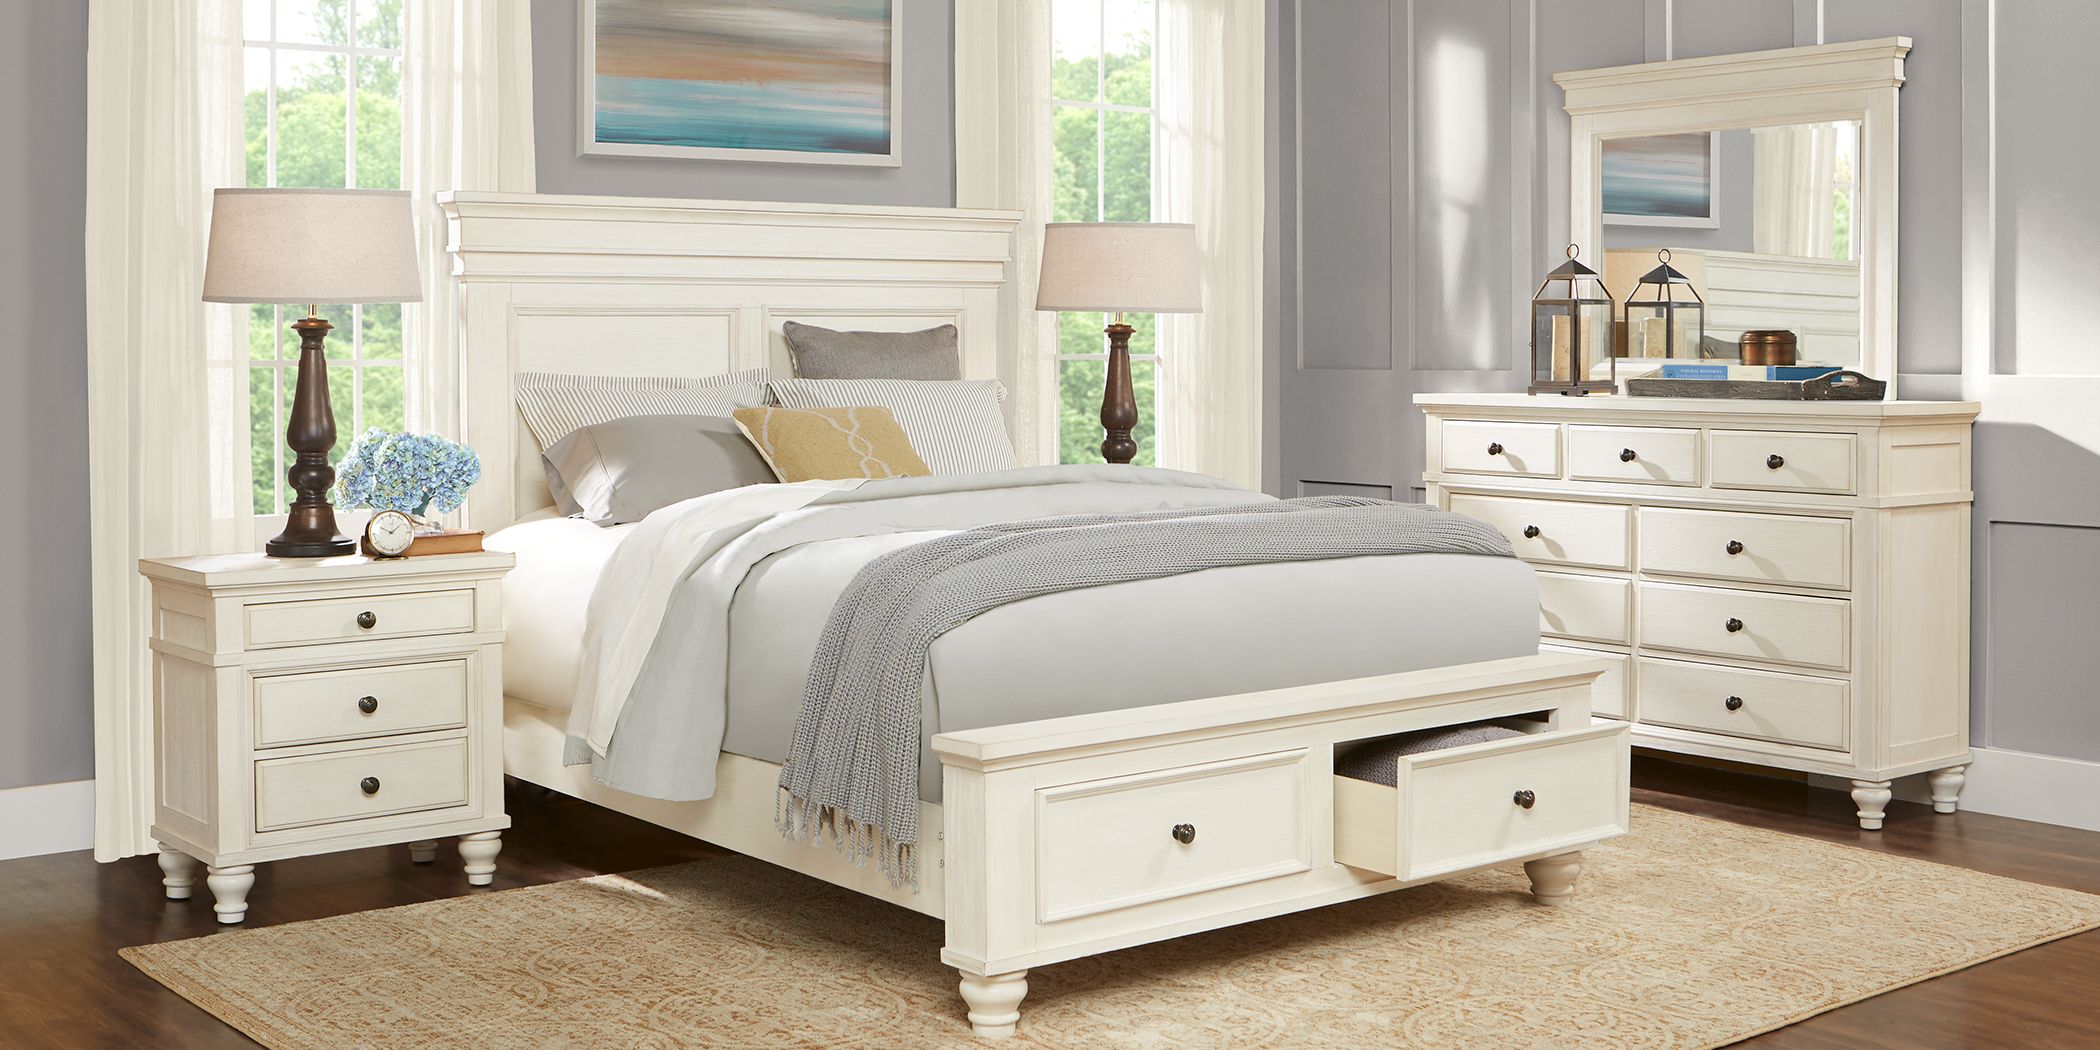 7 Piece Bedroom Furniture Sets King Queen More